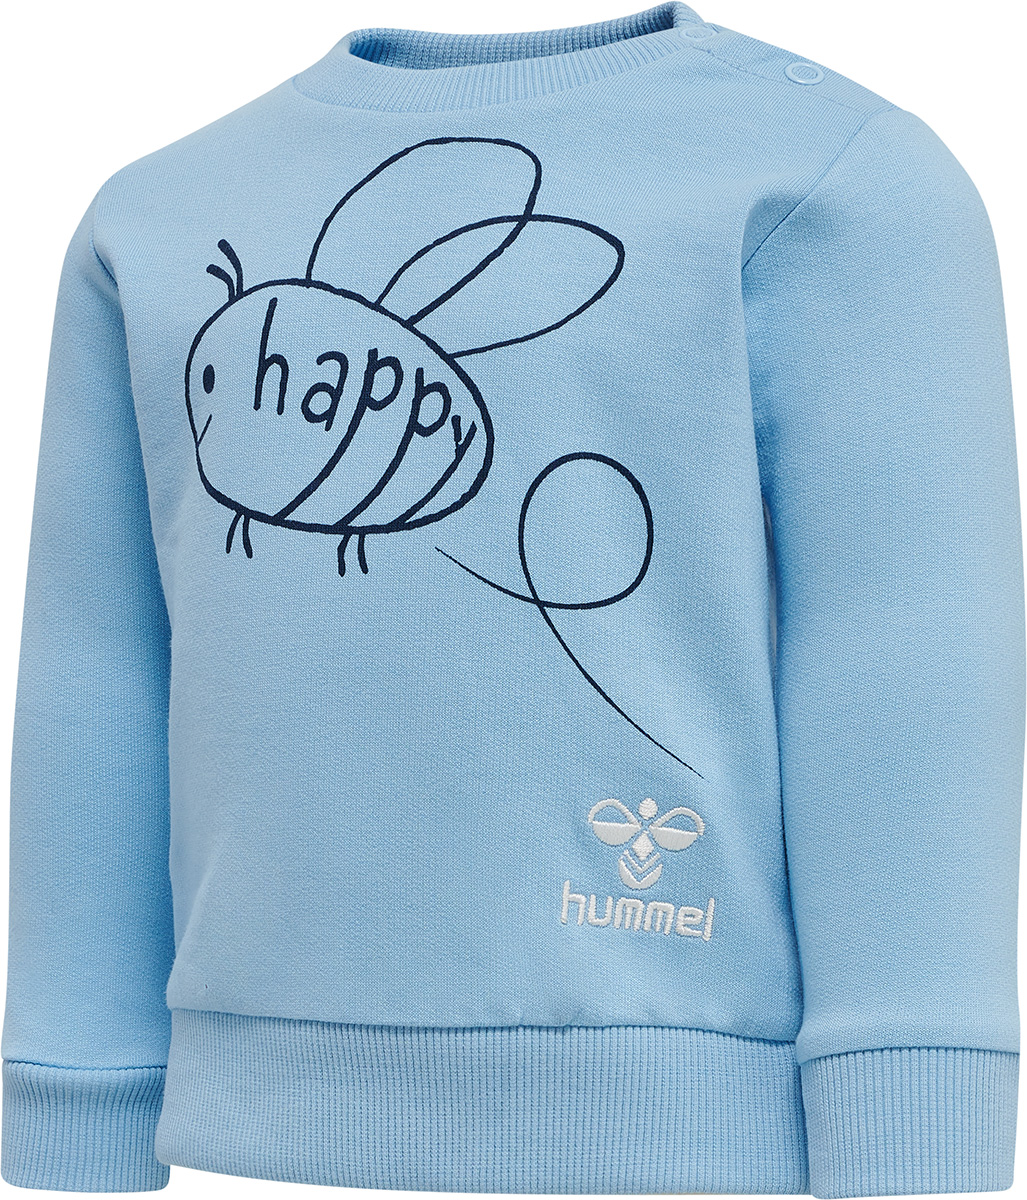 Hummel Free Sweatshirt - Airy Blue